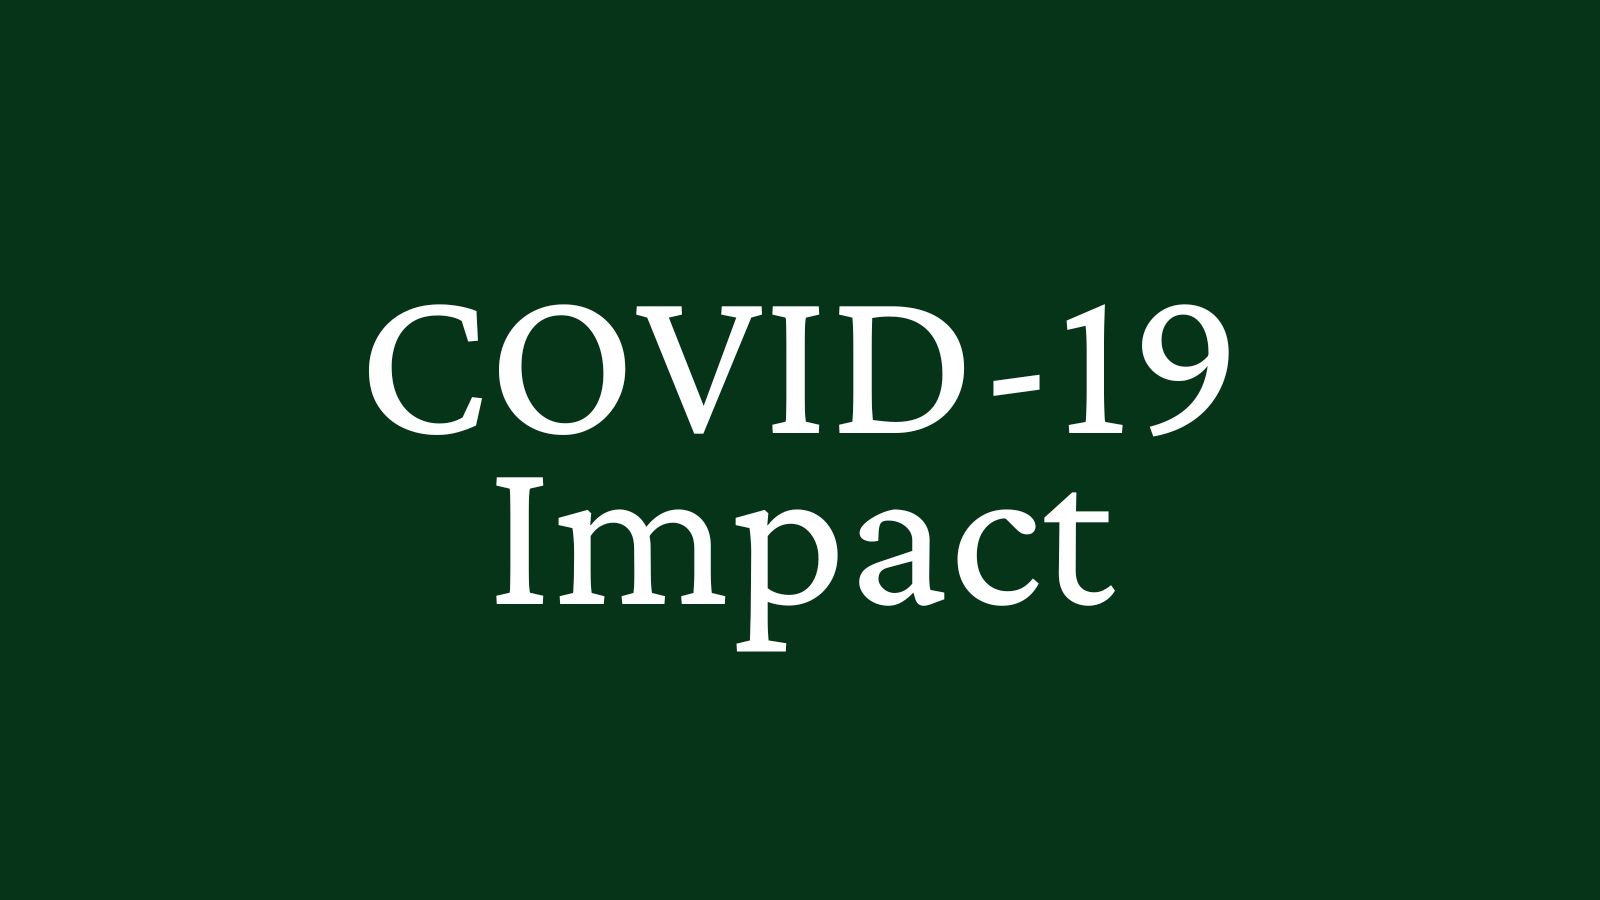 Covid-19 Impact on Singapore Real Estate